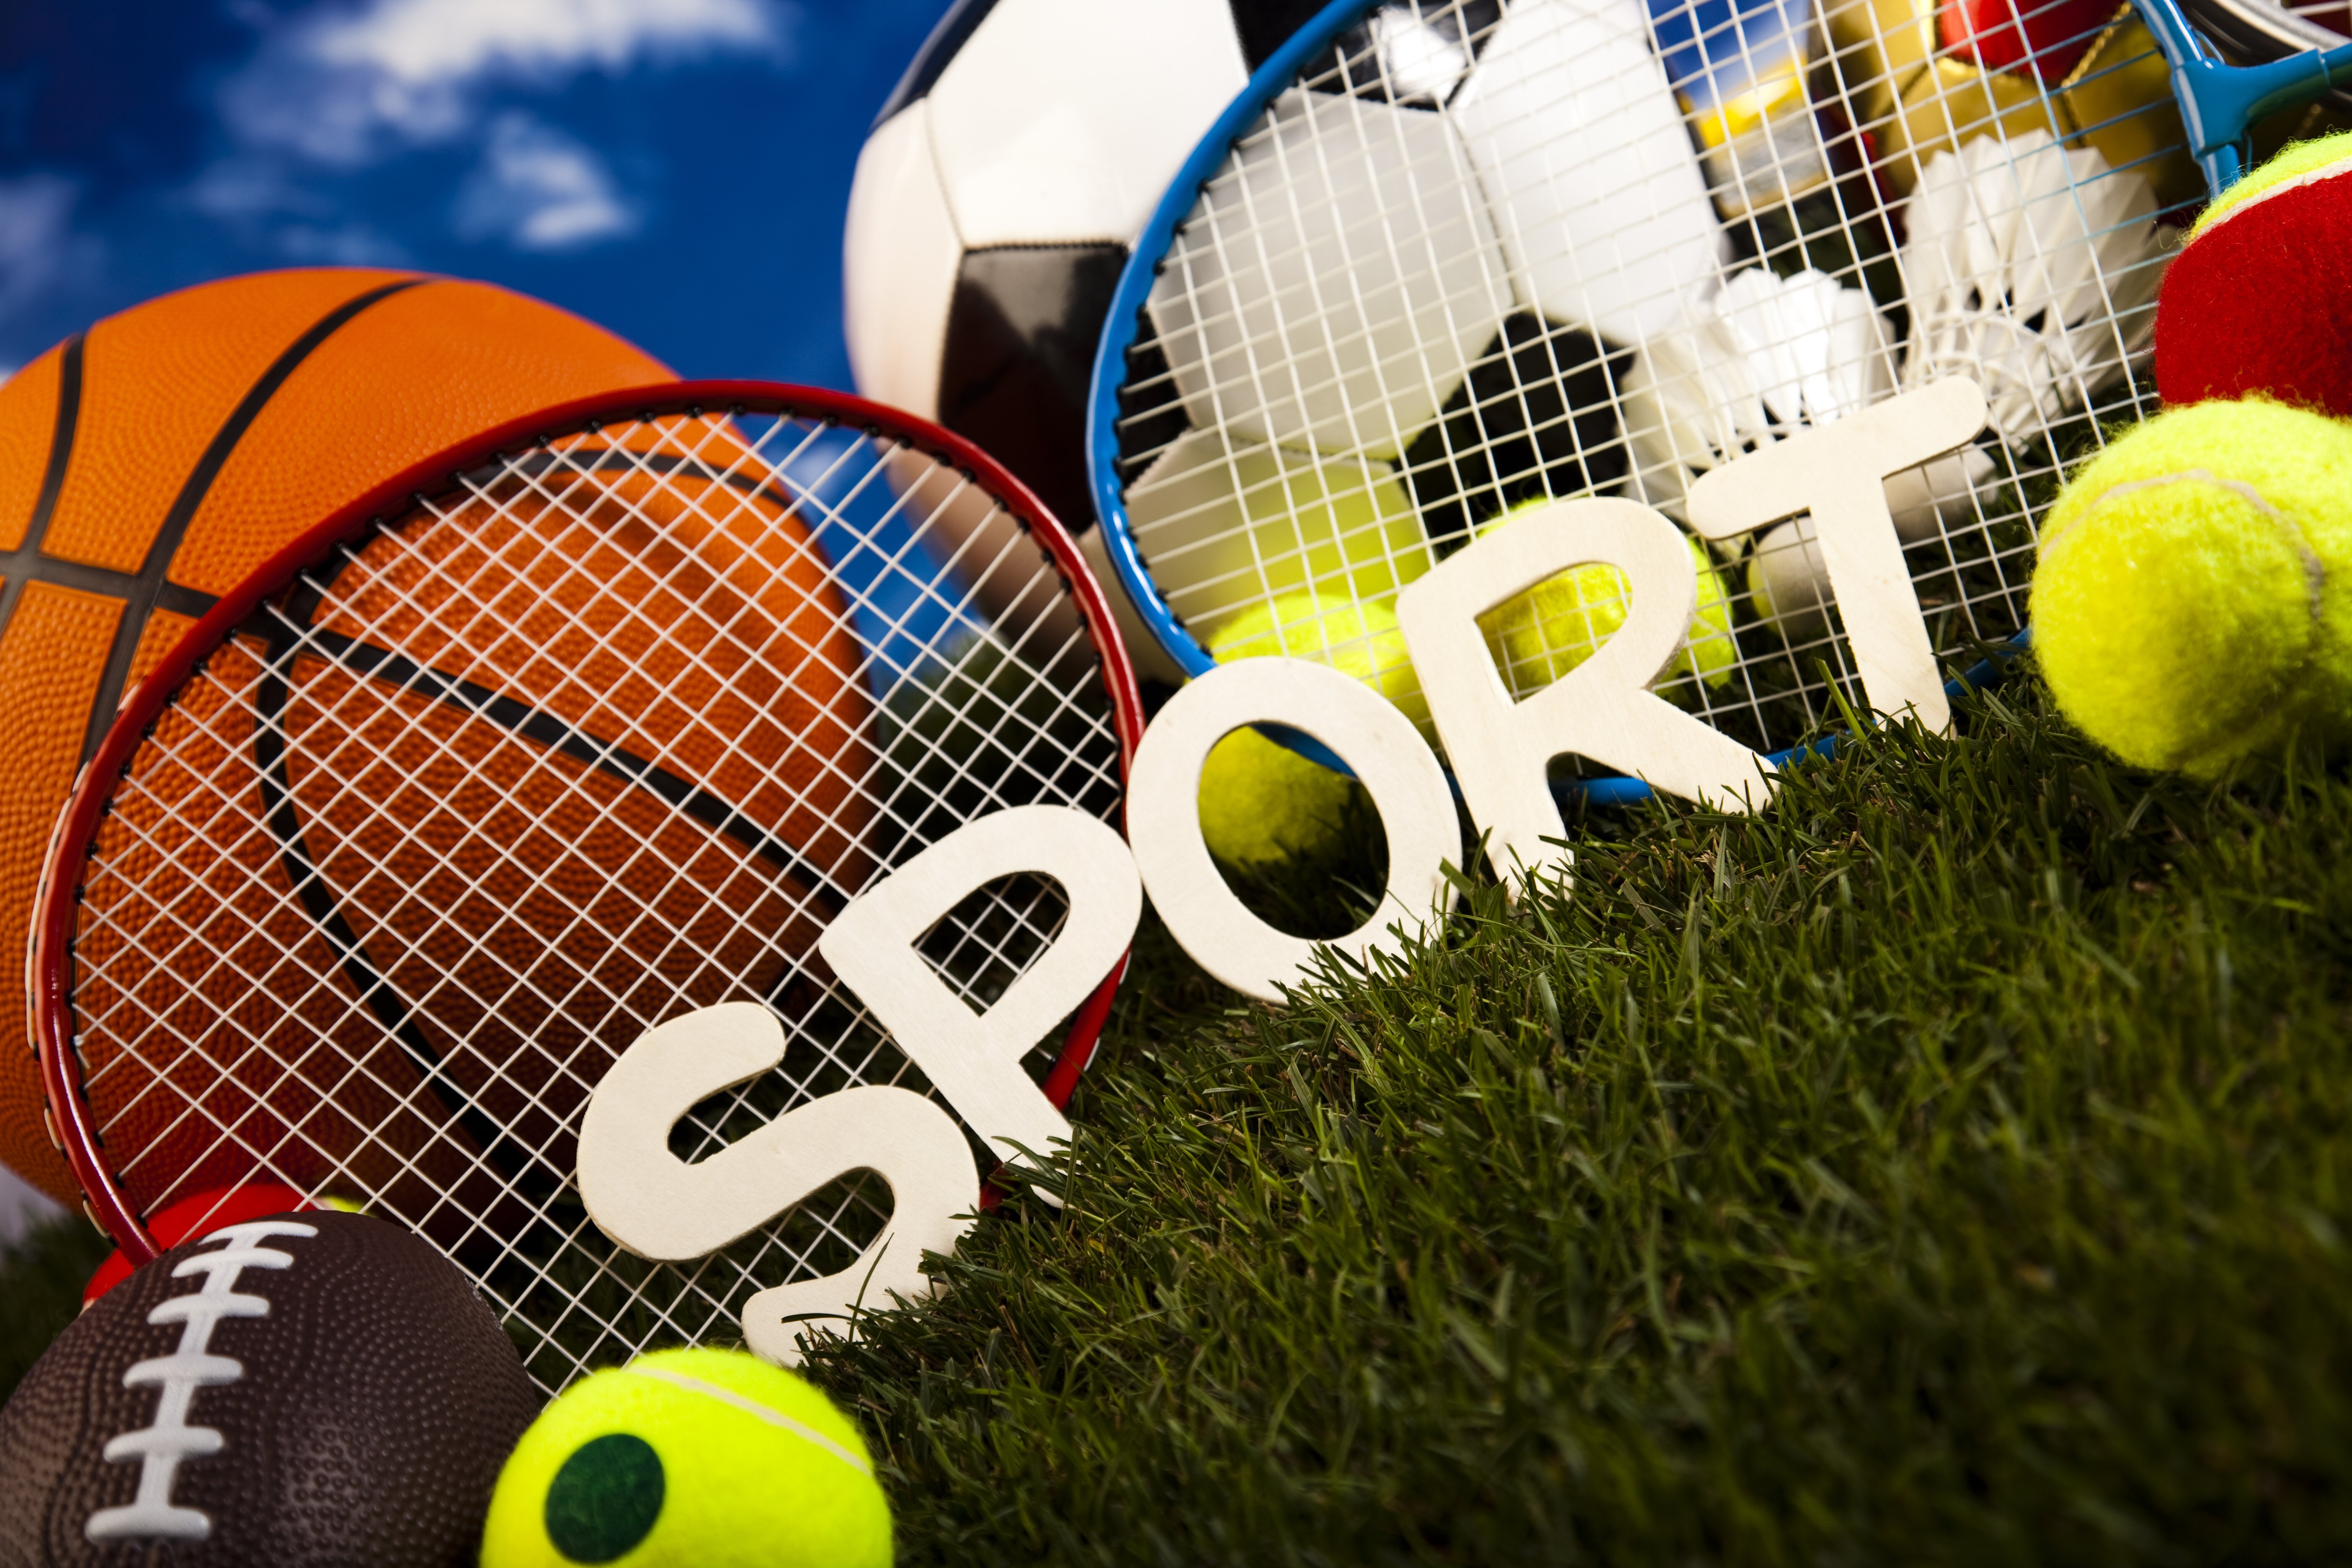 Blogs sports ru. Спорт вокруг. Sport Top игрушка. Картинка для блога про спорт. Спортивный блог.